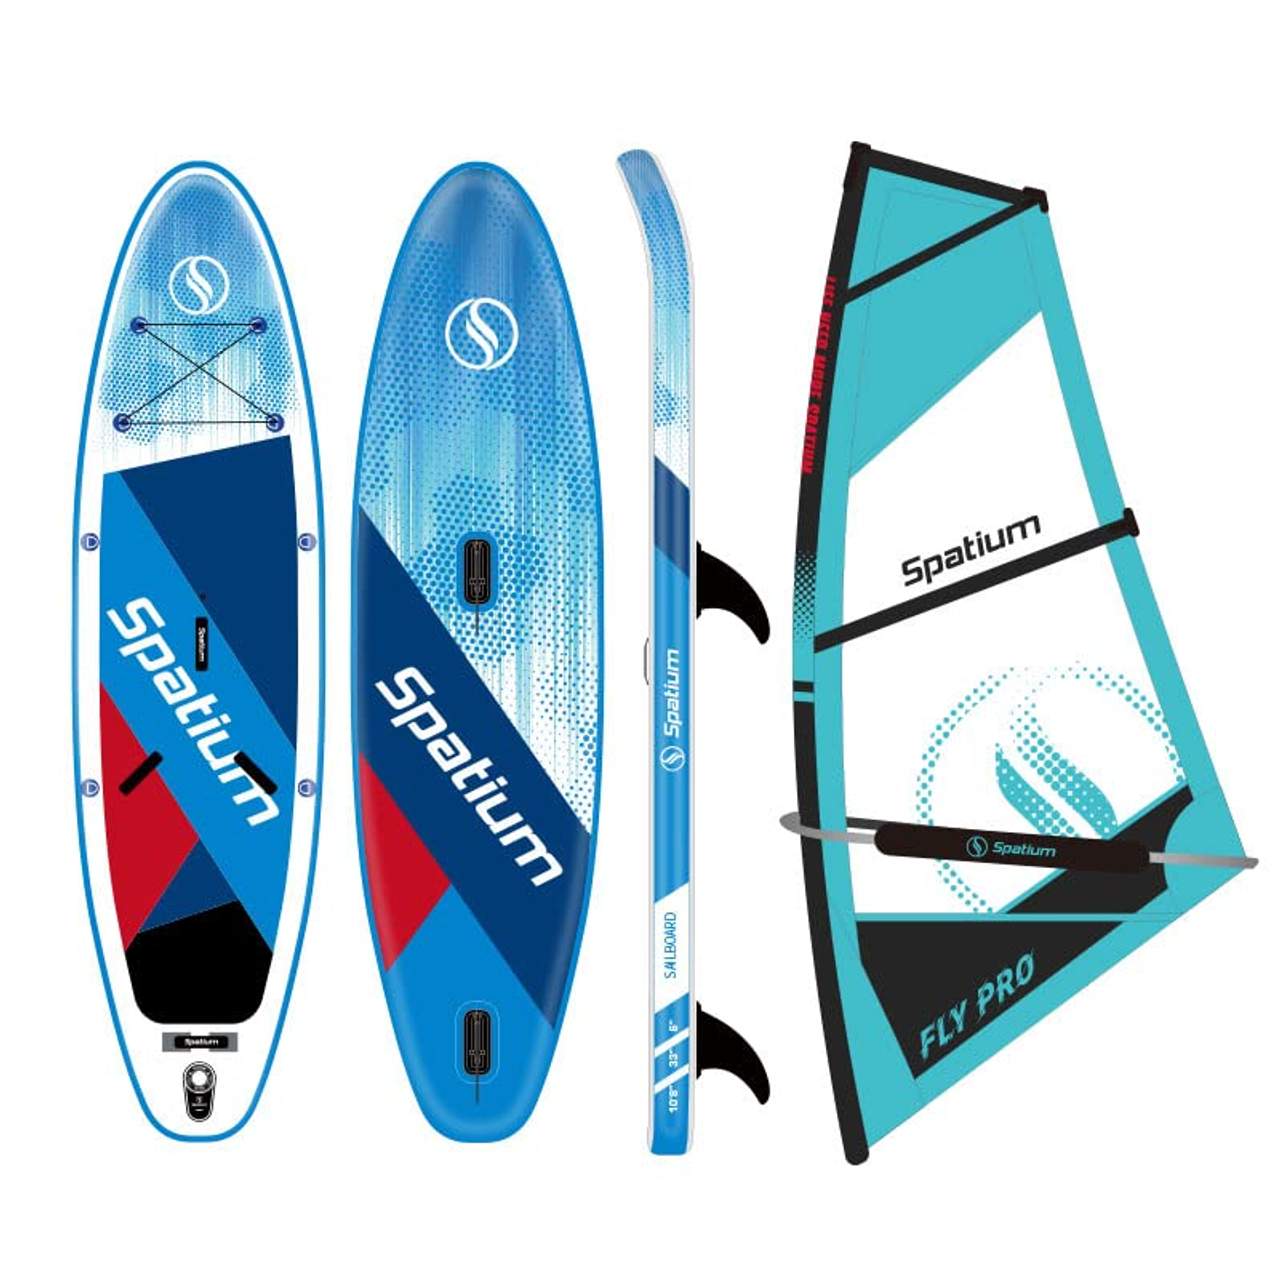 Spatium Windsurf Sail Professionelles aufblasbares Sup Paddle Board